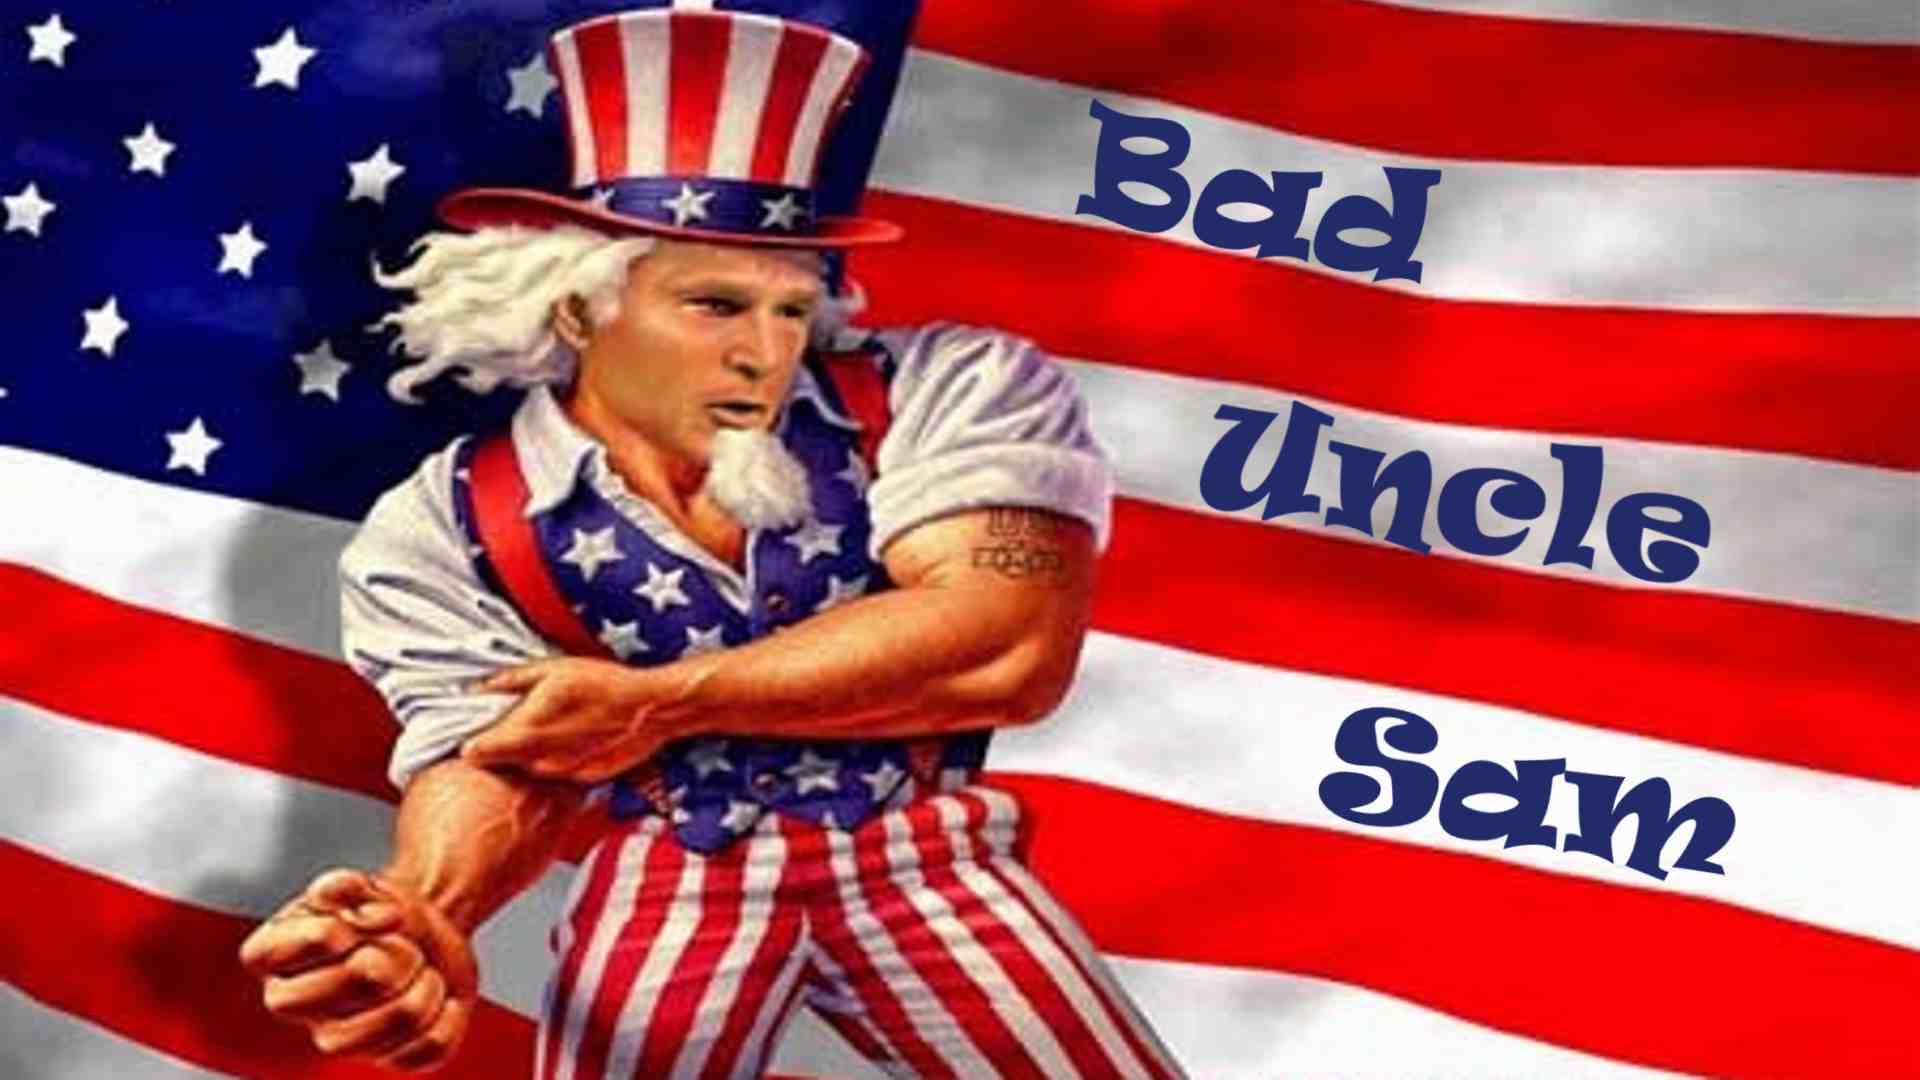 Bad Uncle Sam